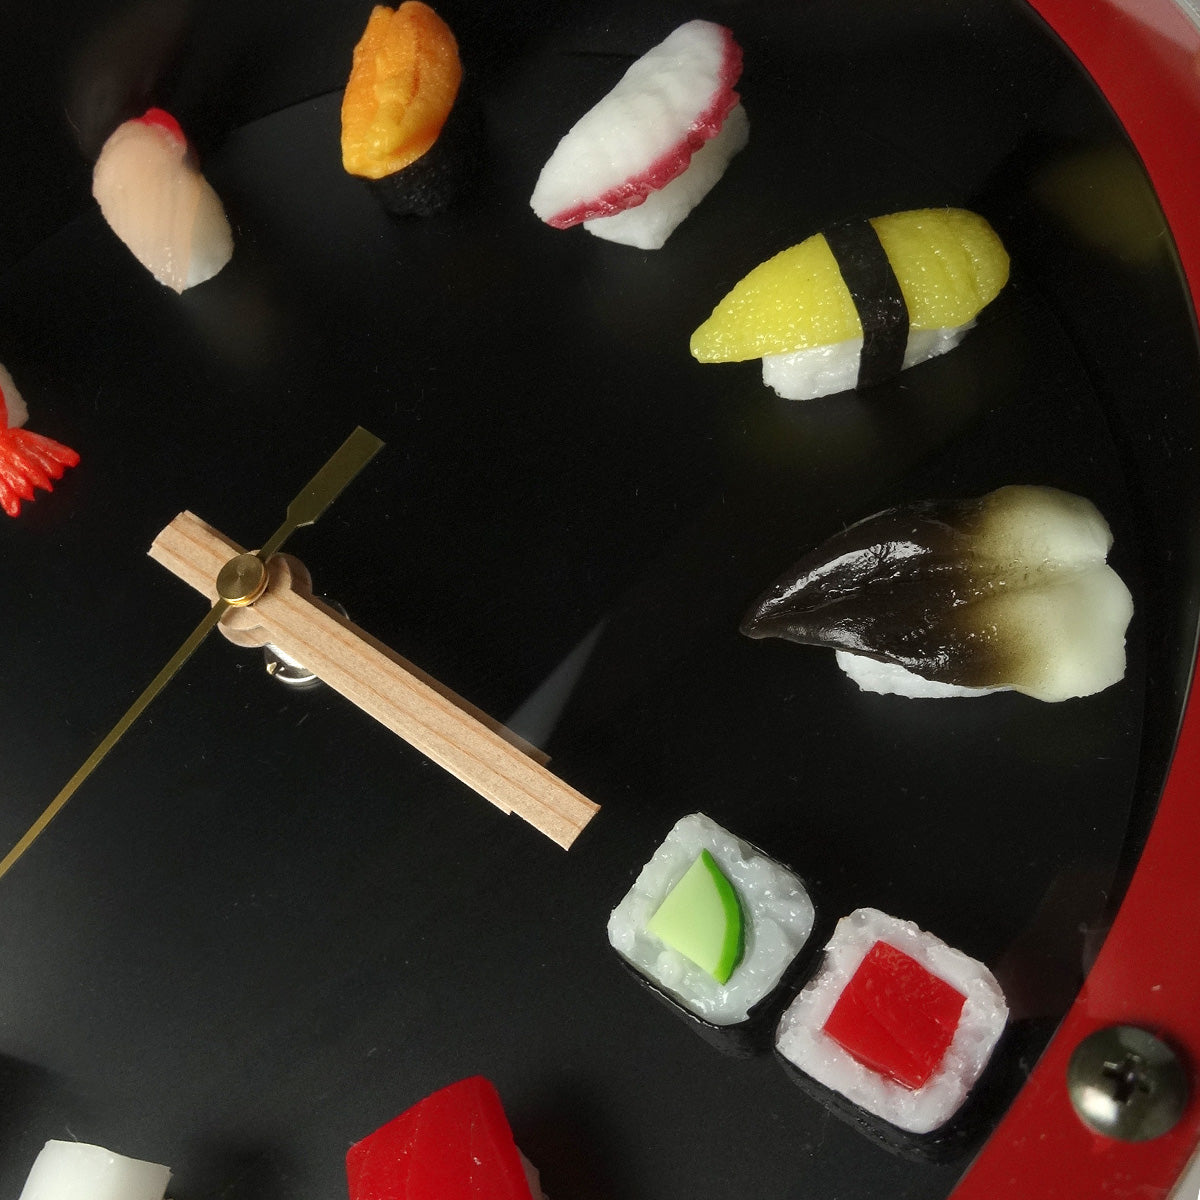 元祖食品サンプル屋「寿司時計」